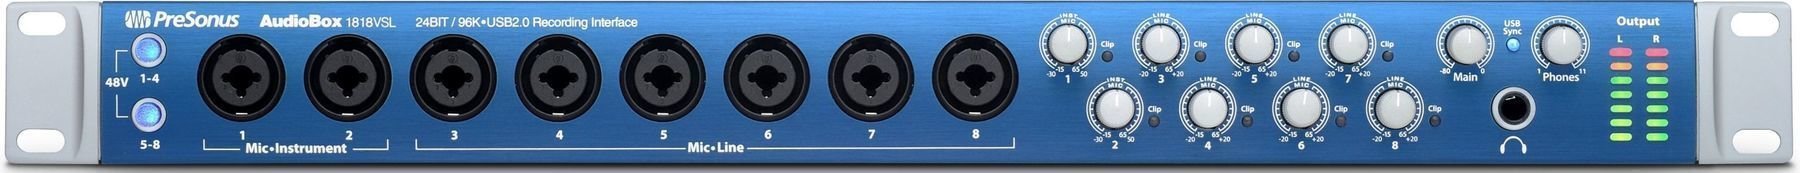 USB-audio-interface - geluidskaart Presonus AudioBox 1818 VSL